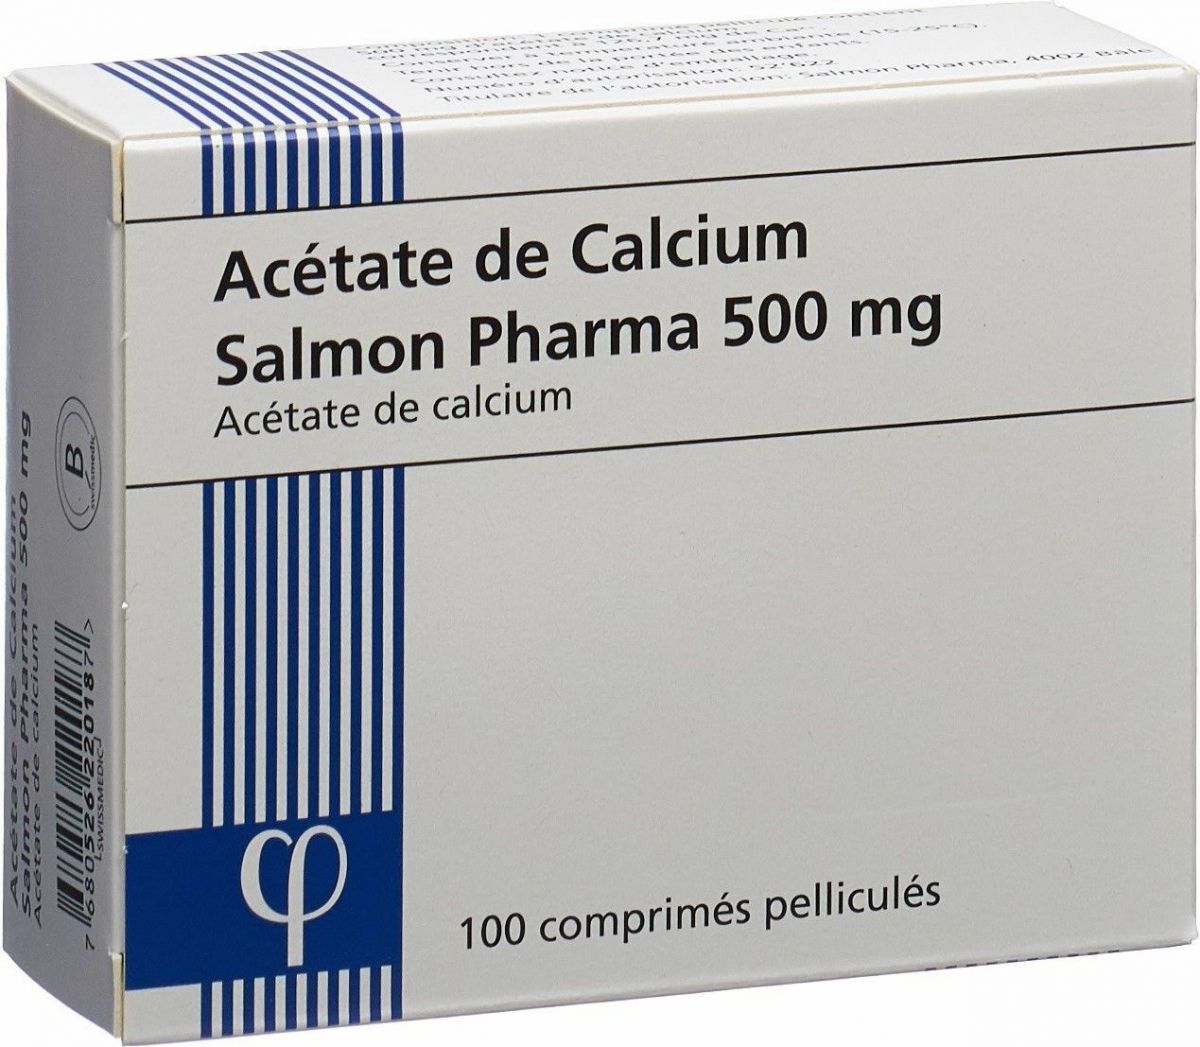 Calcium Acetat Salmon Pharma mg Stück in der Adler Apotheke